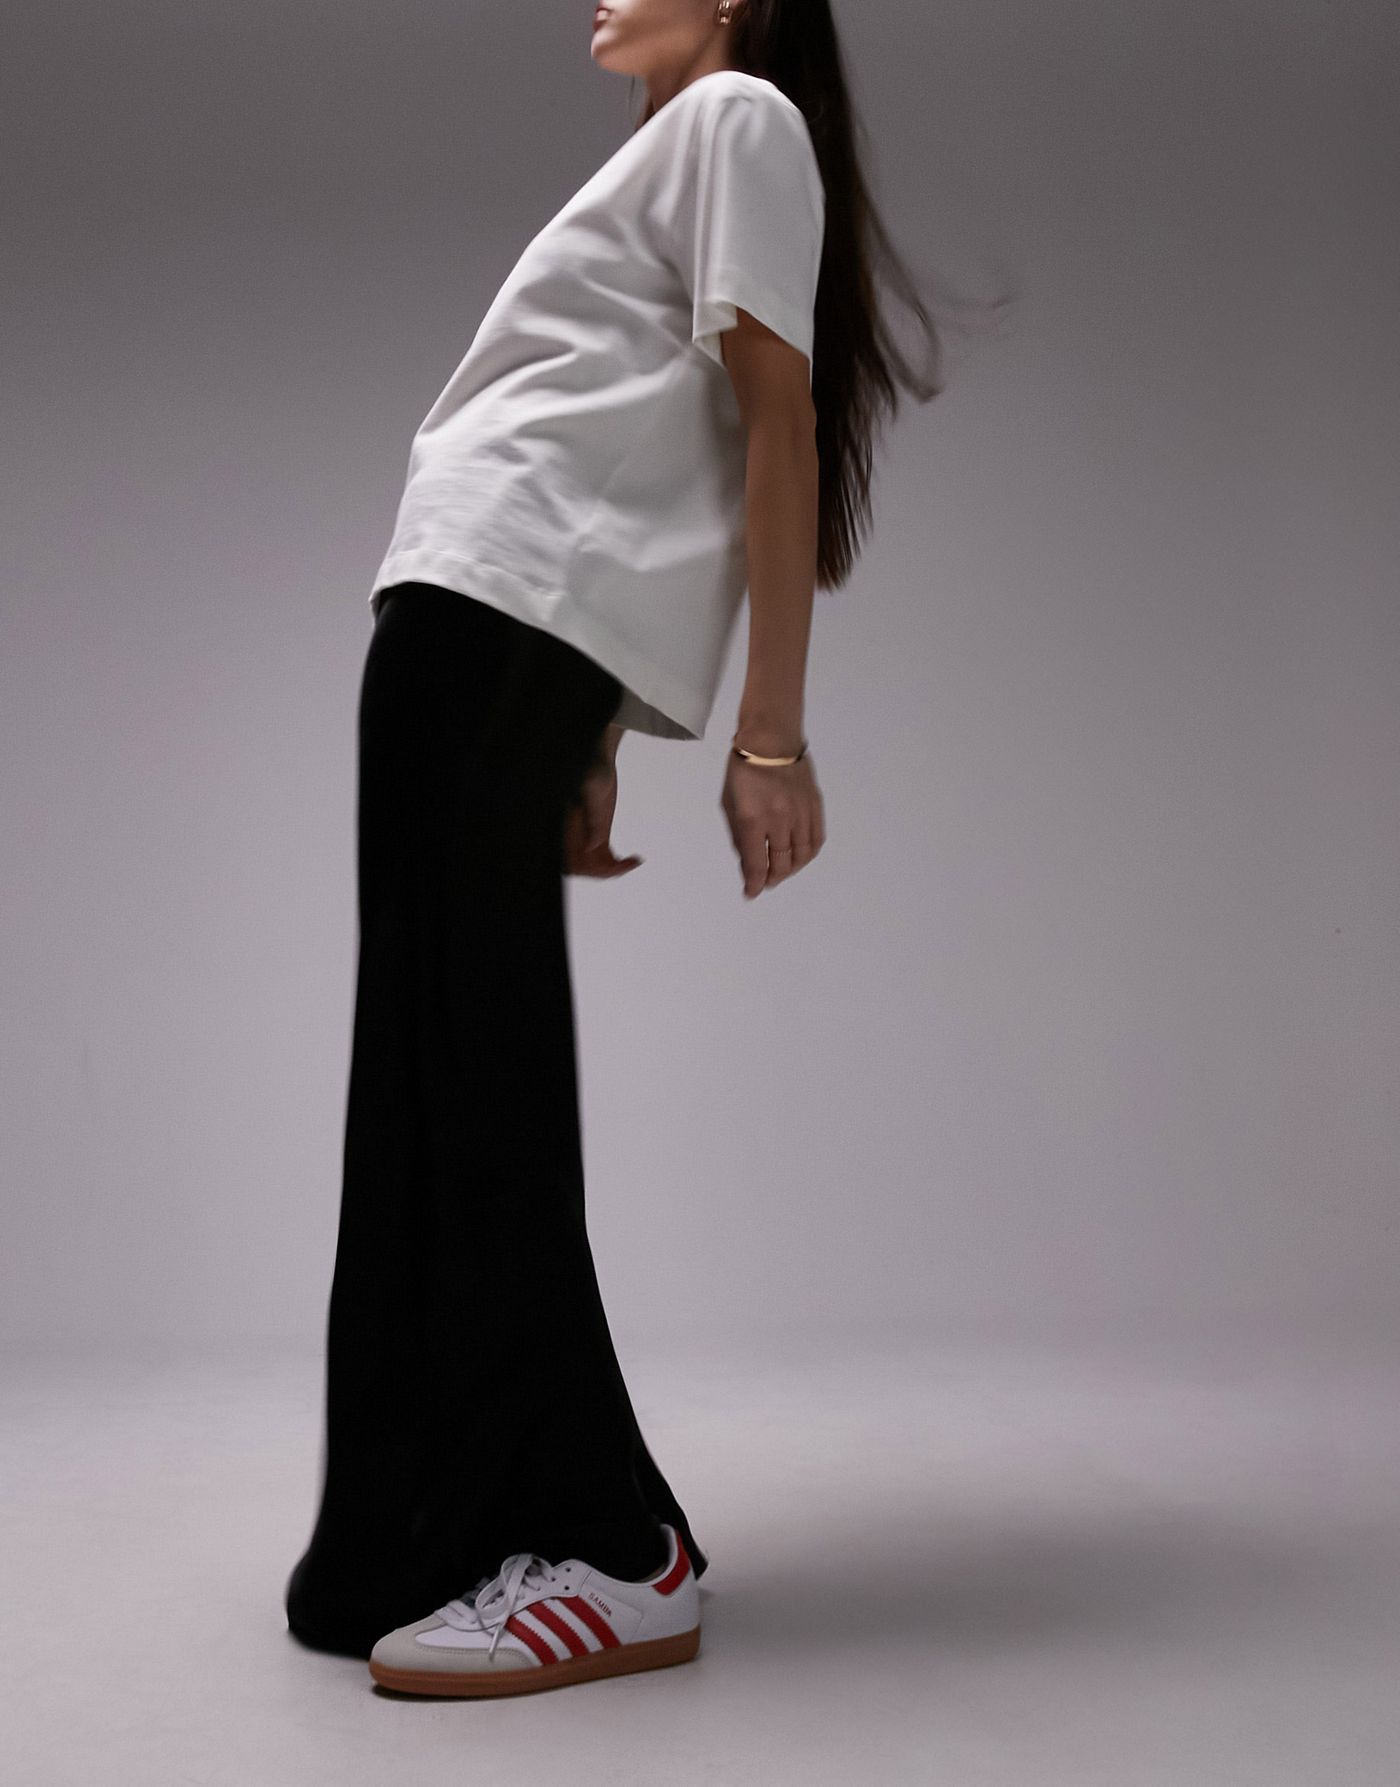 Topshop satin bias maxi skirt in black